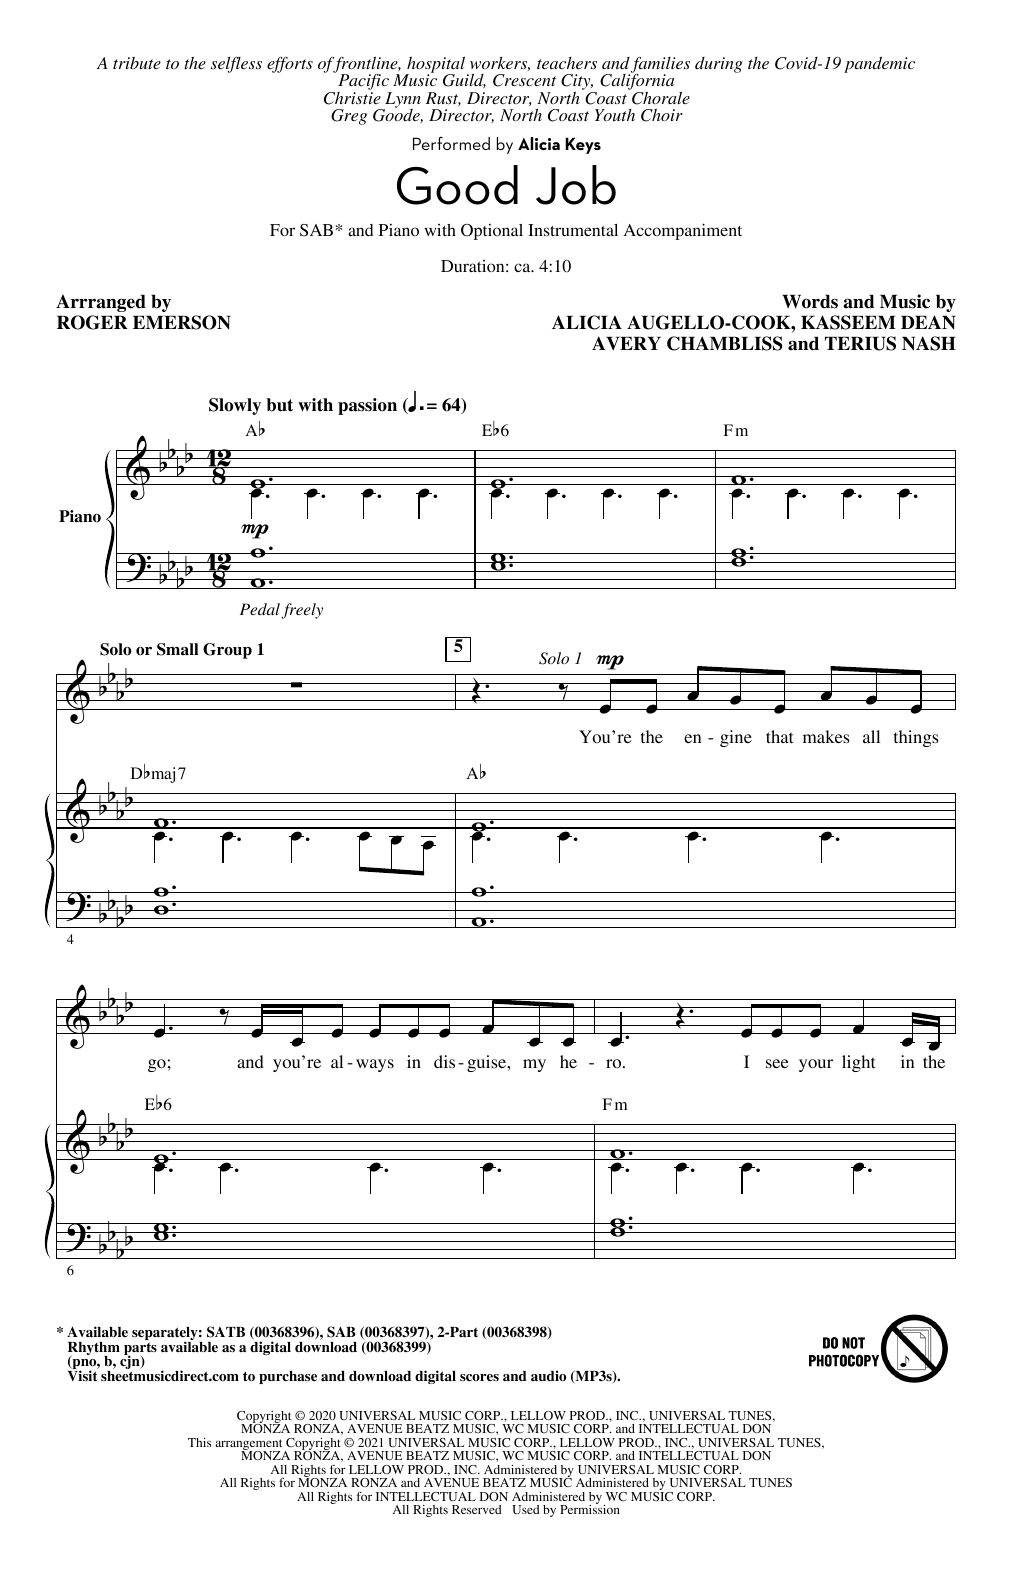 Alicia Keys Good Job (arr. Roger Emerson) Sheet Music Notes & Chords for SATB Choir - Download or Print PDF